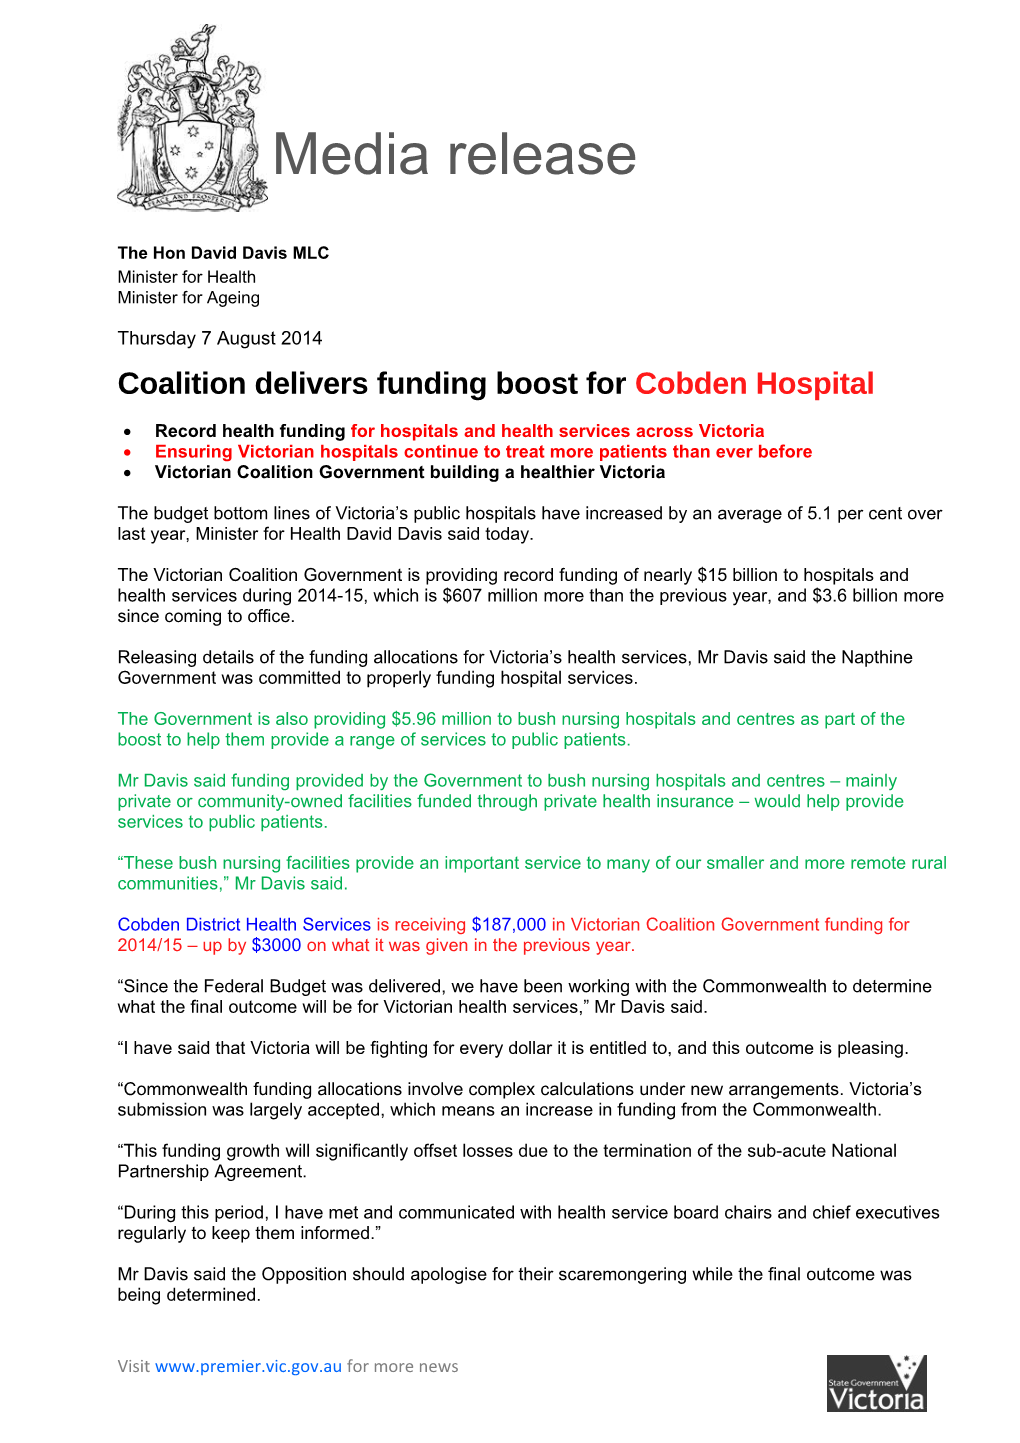 Coalition Delivers Funding Boost for Cobden Hospital